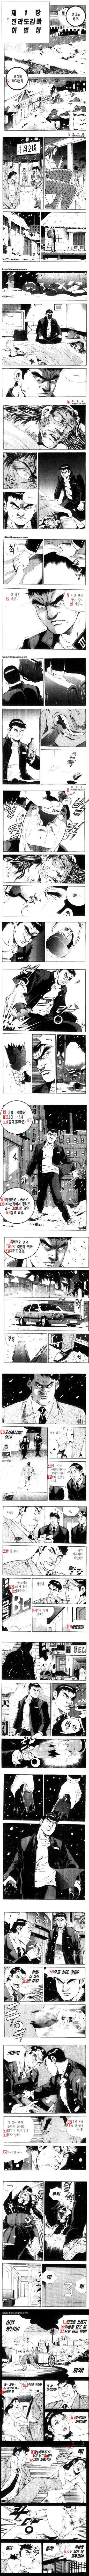 Kim Seong-mo's comic book, Jeolla-do's Gapbap, sloppy